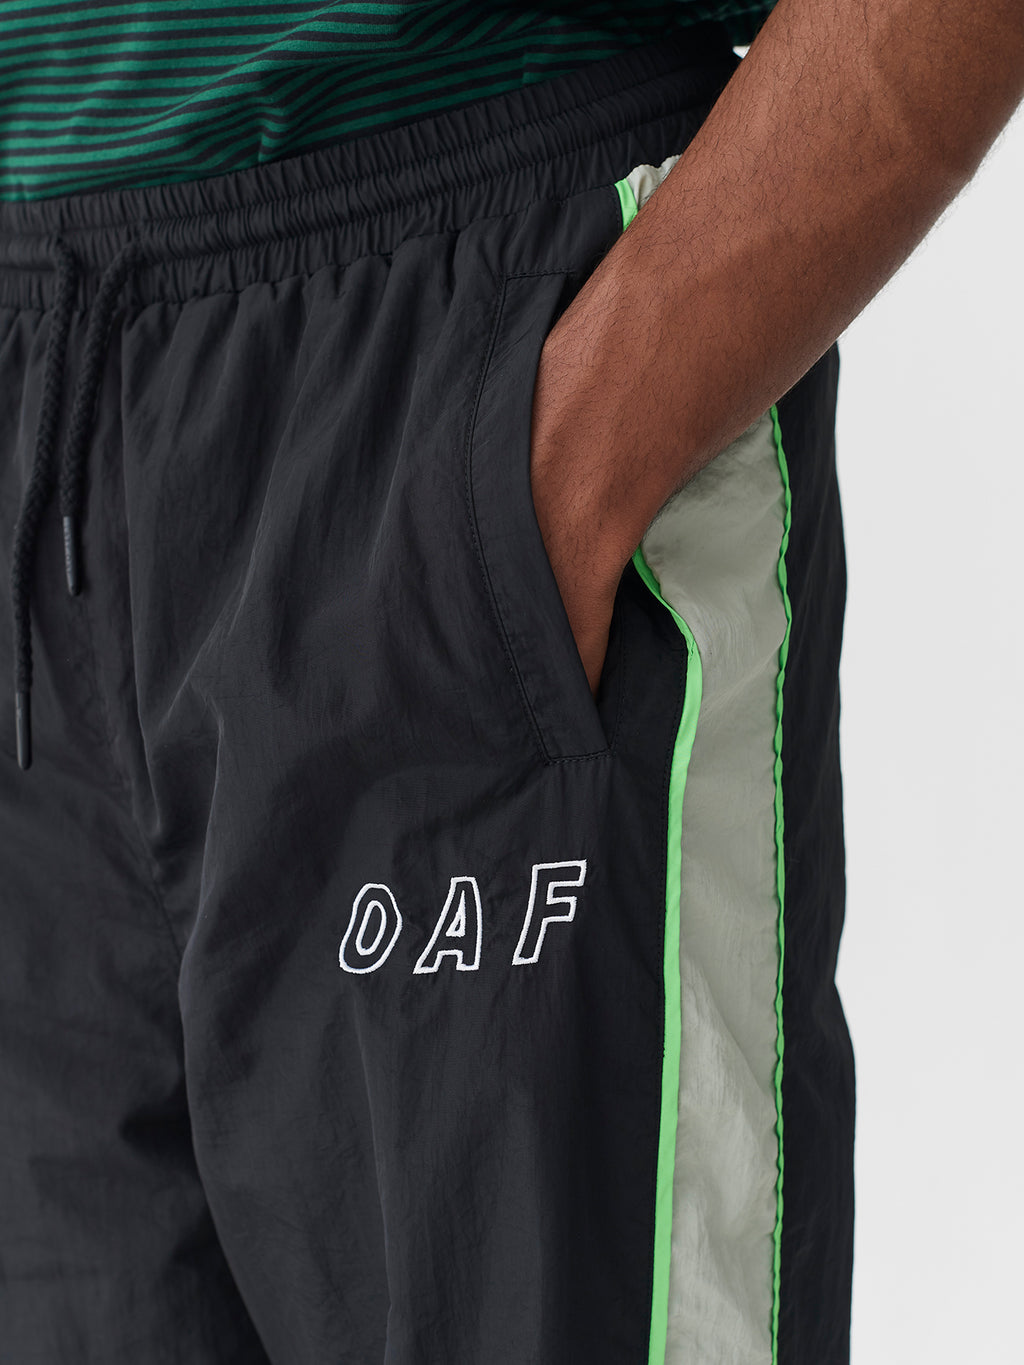 Lazy Oaf Oaf Track Pants